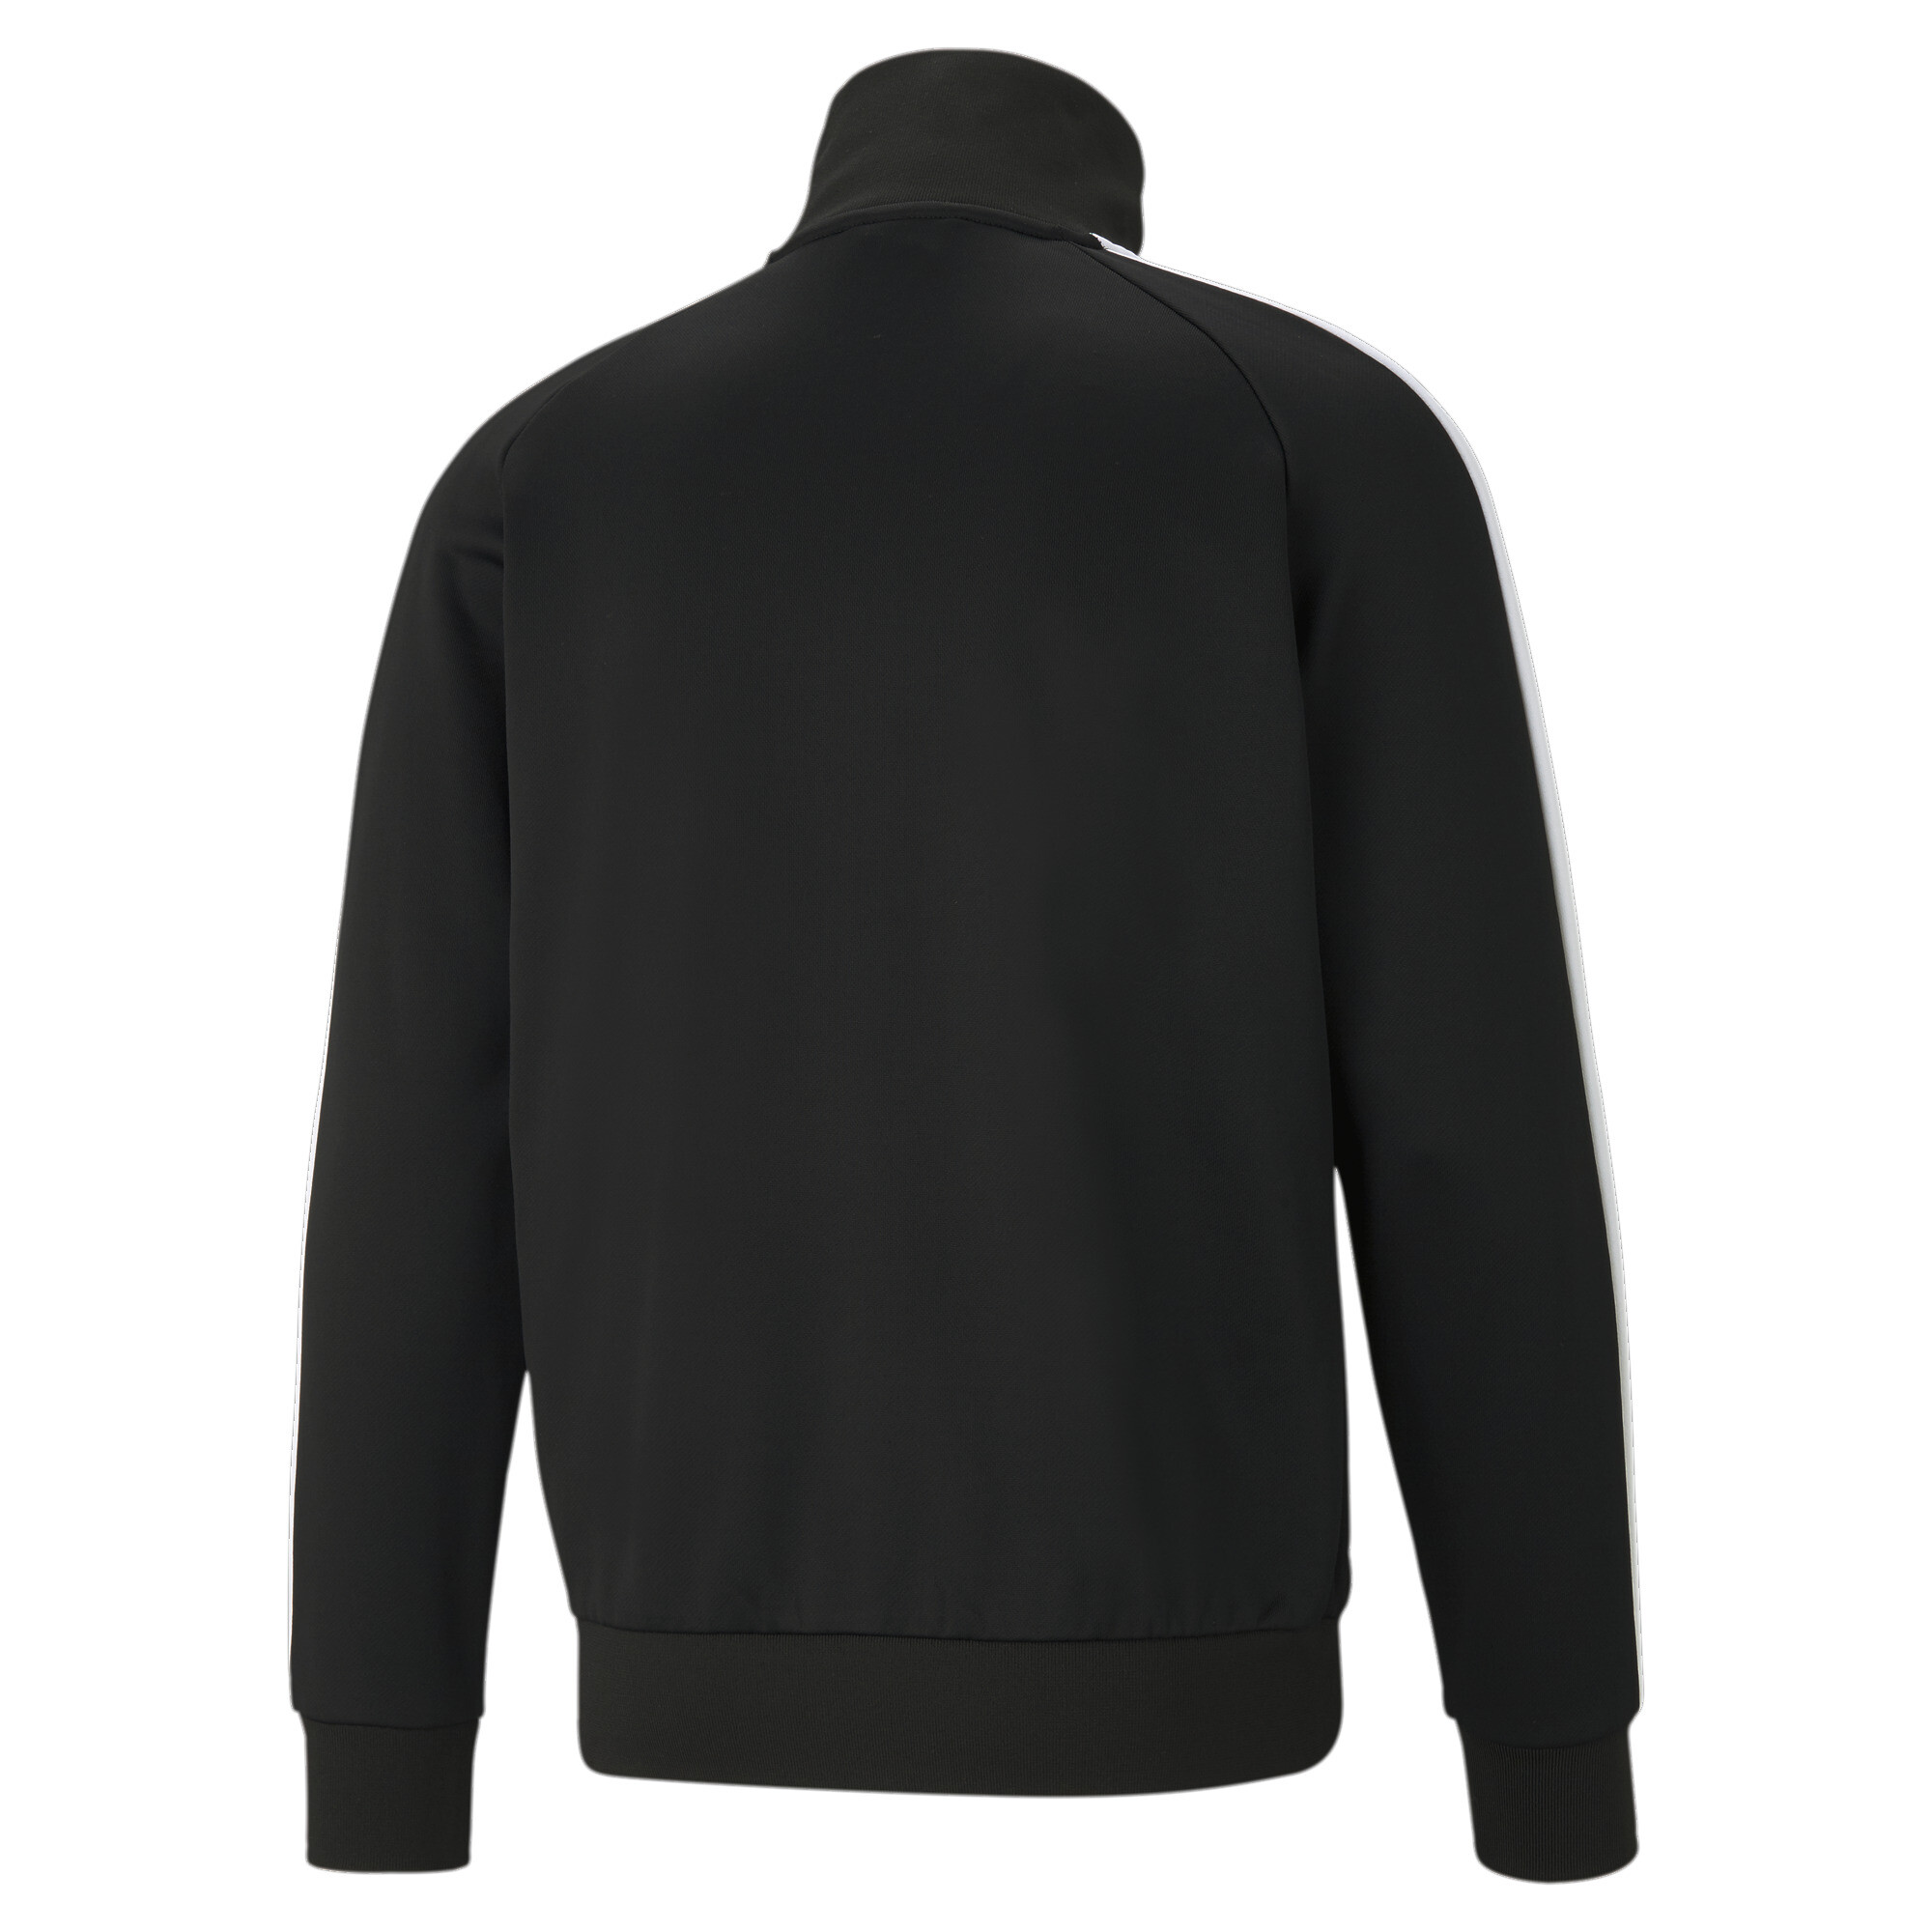 Men's PUMA Iconic T7 Track Jacket In Black, Size XS